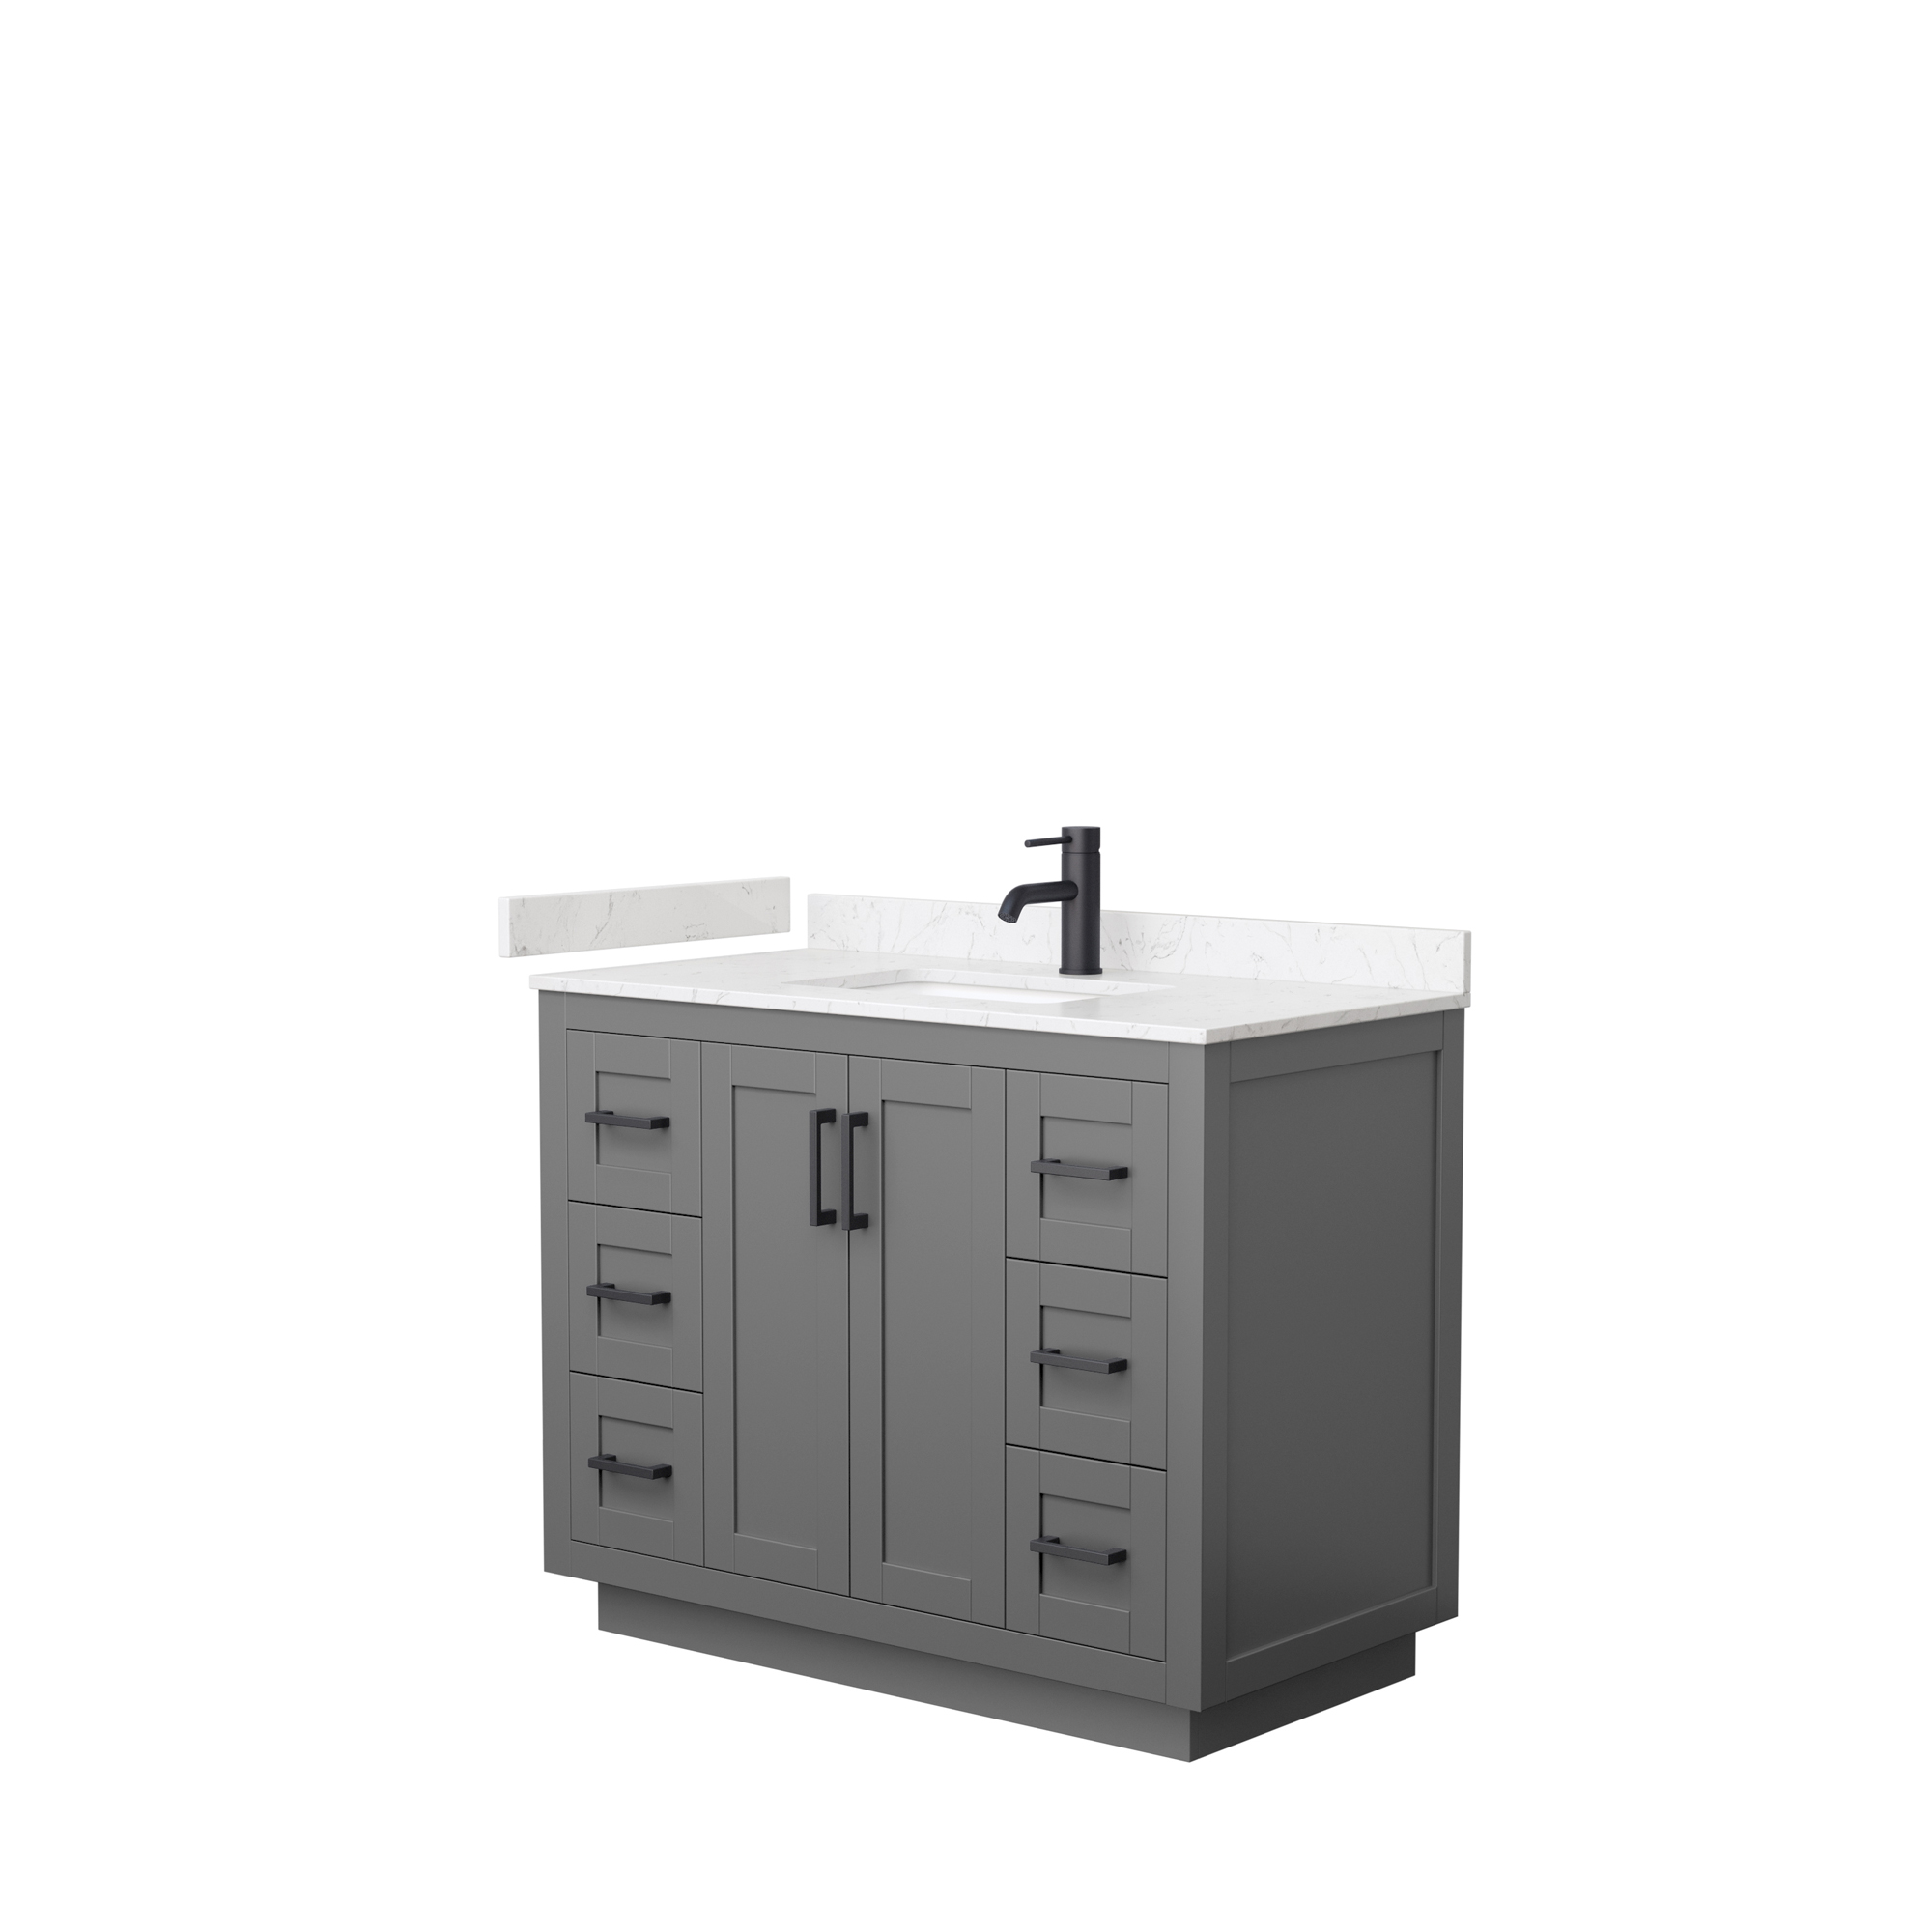 42" Single Bathroom Vanity in Dark Gray, Light-Vein Carrara Cultured Marble Countertop, Undermount Square Sink, Matte Black Trim